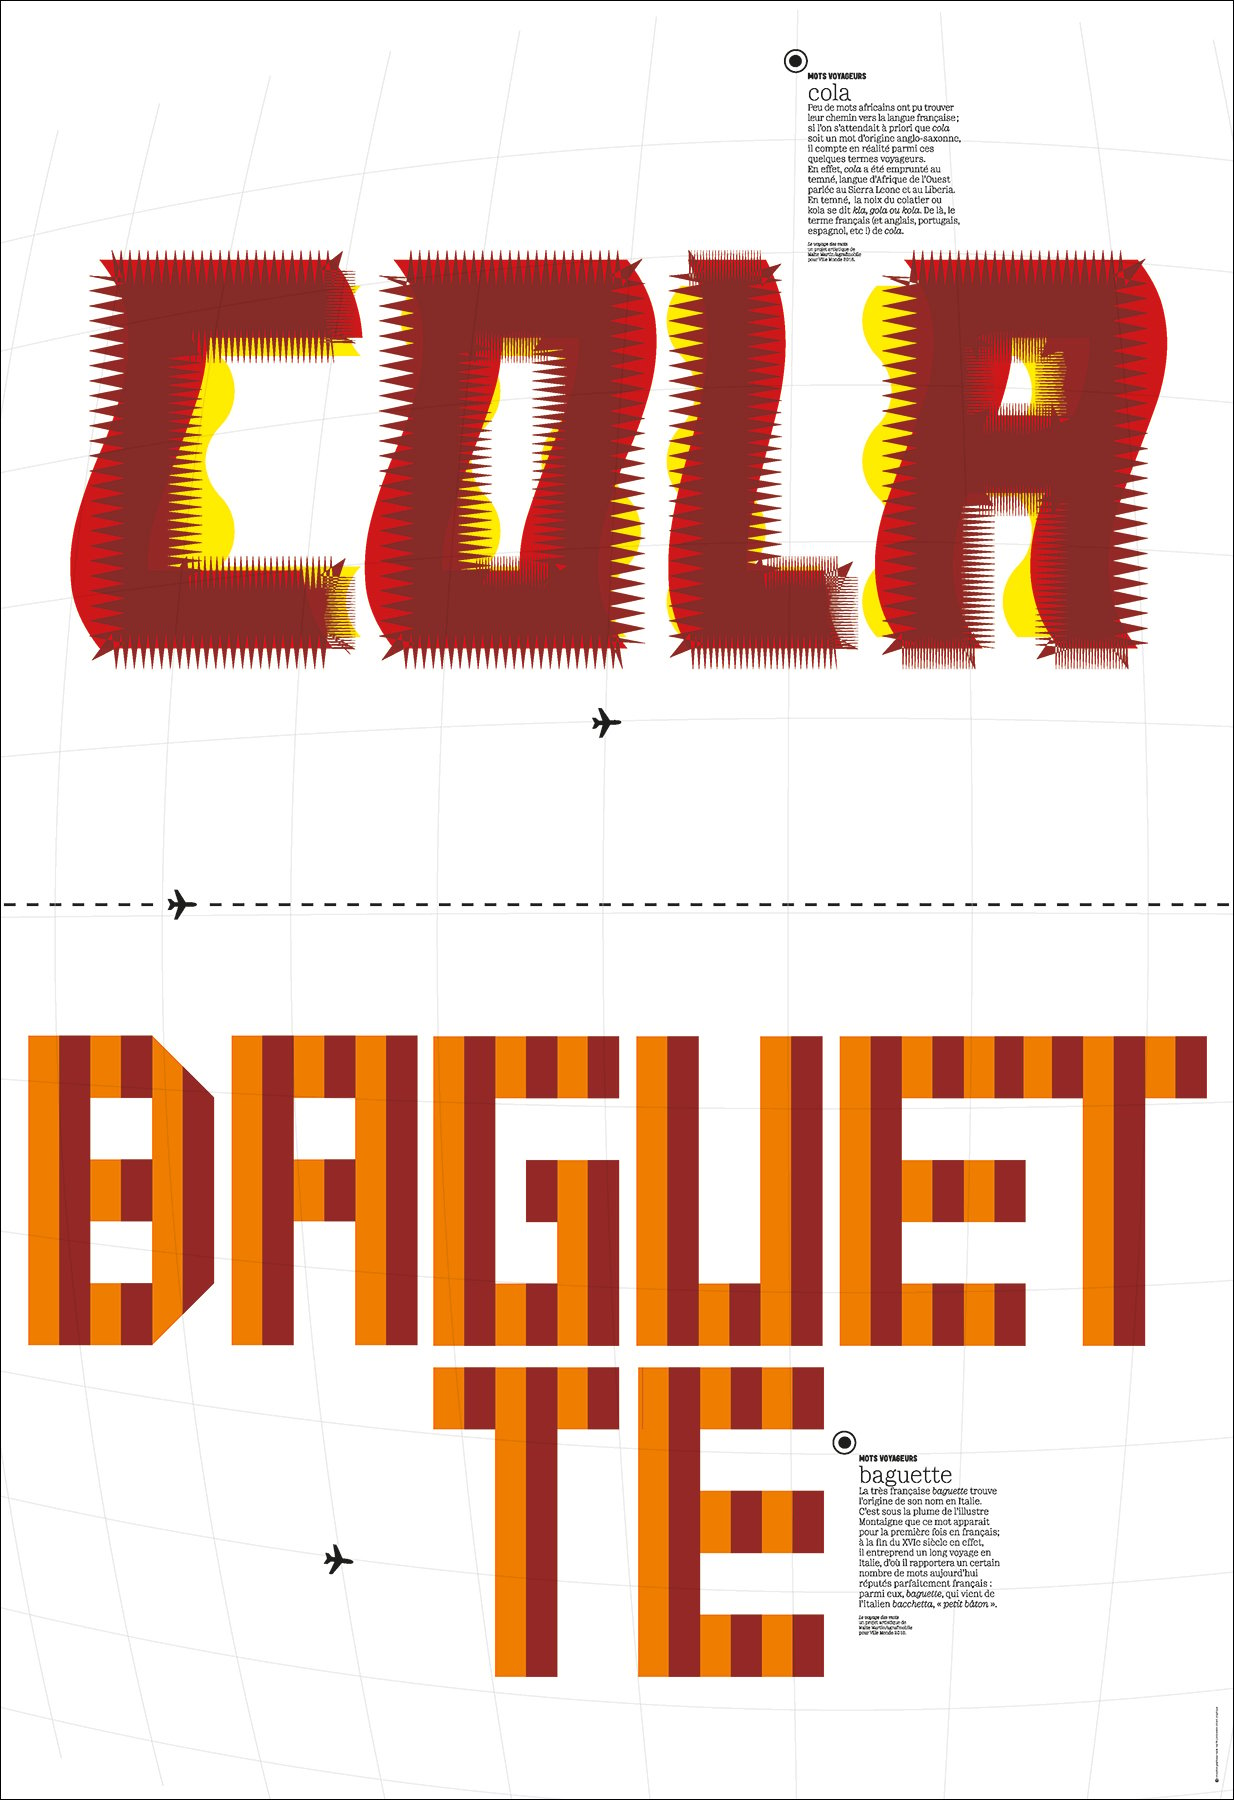 Image of Mots voyageurs - poster “cola/baguette”